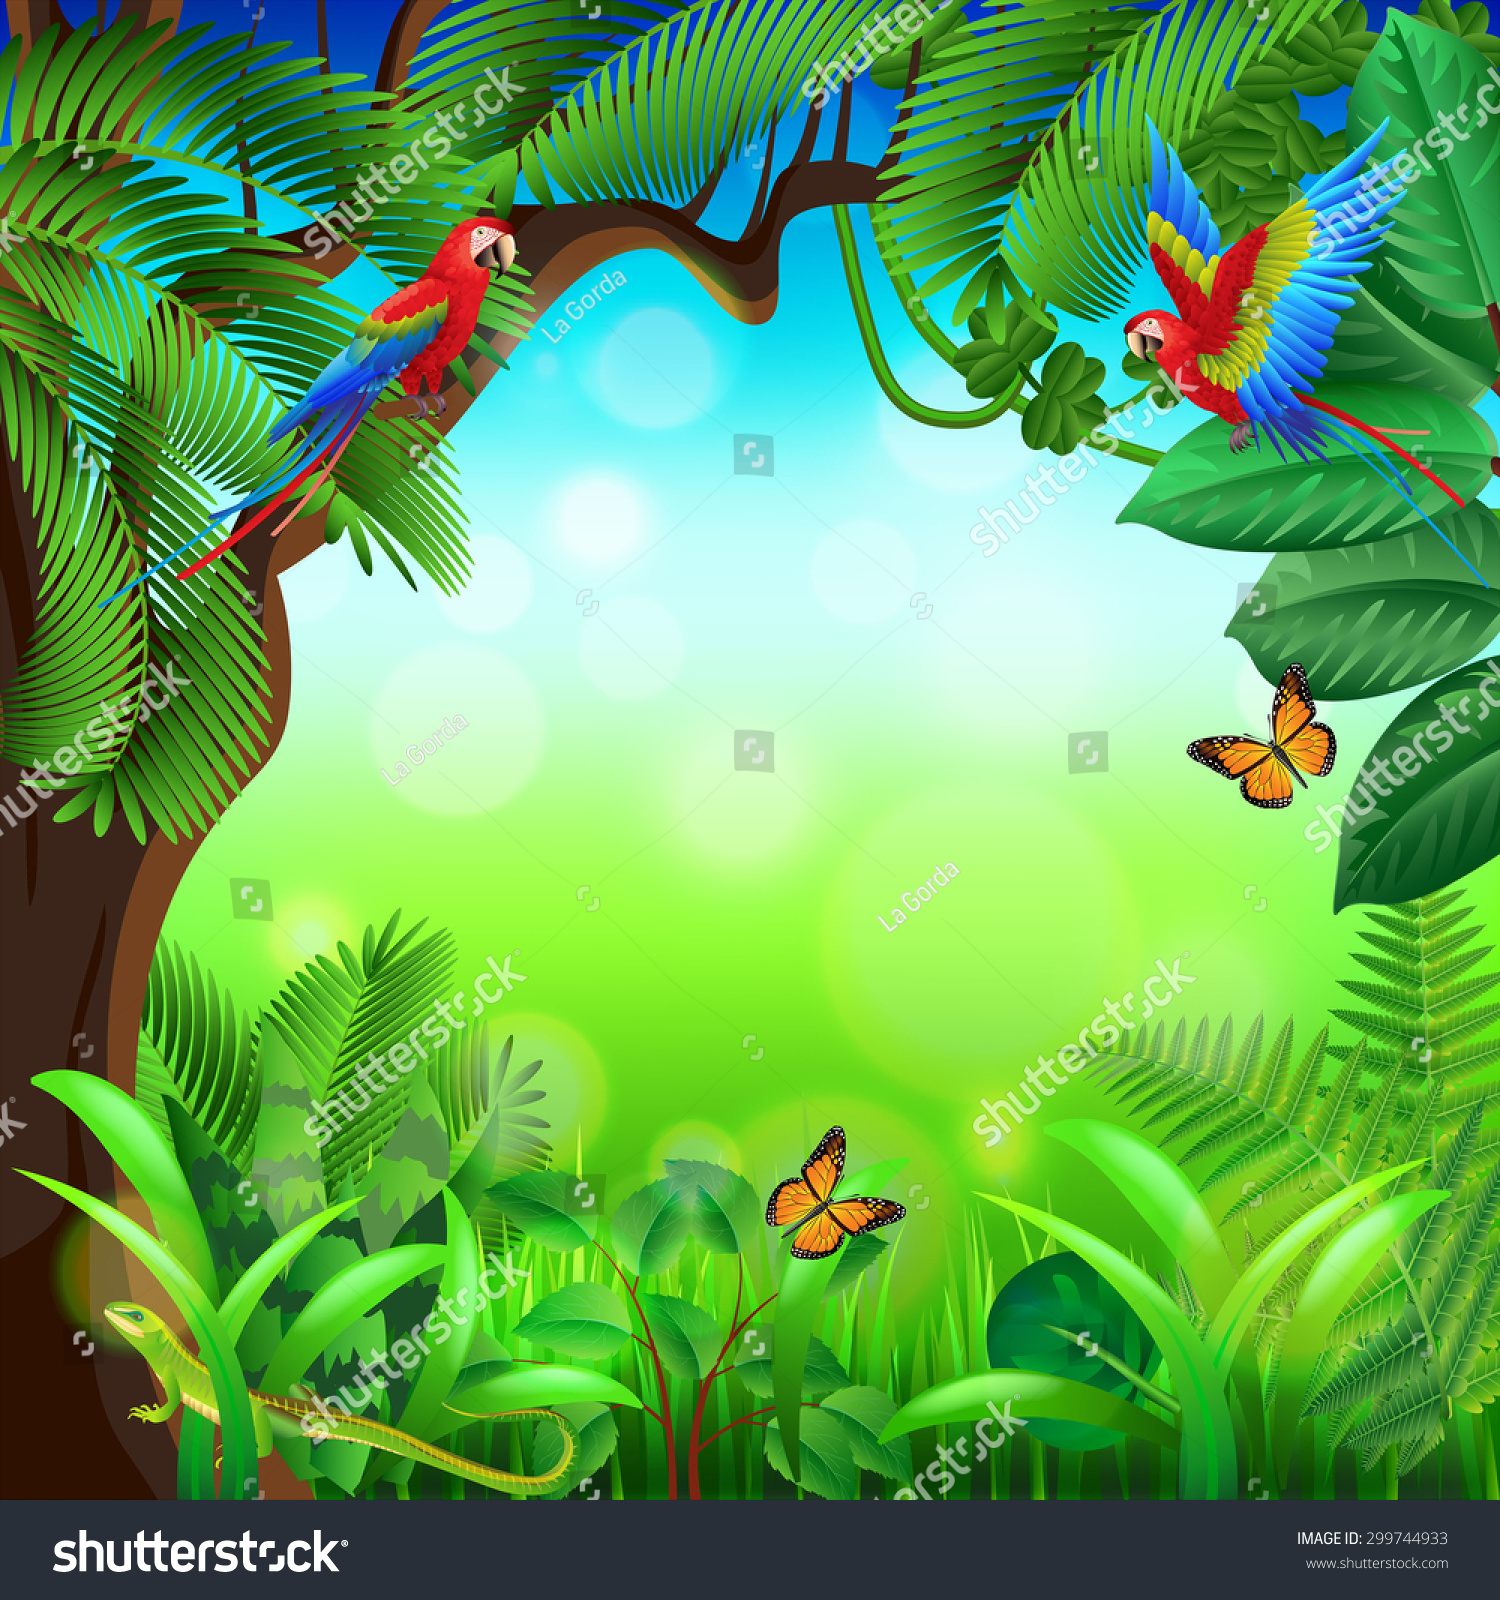 Tropical Jungle Animals Photo Realistic Vector Stock Vector 299744933 ...